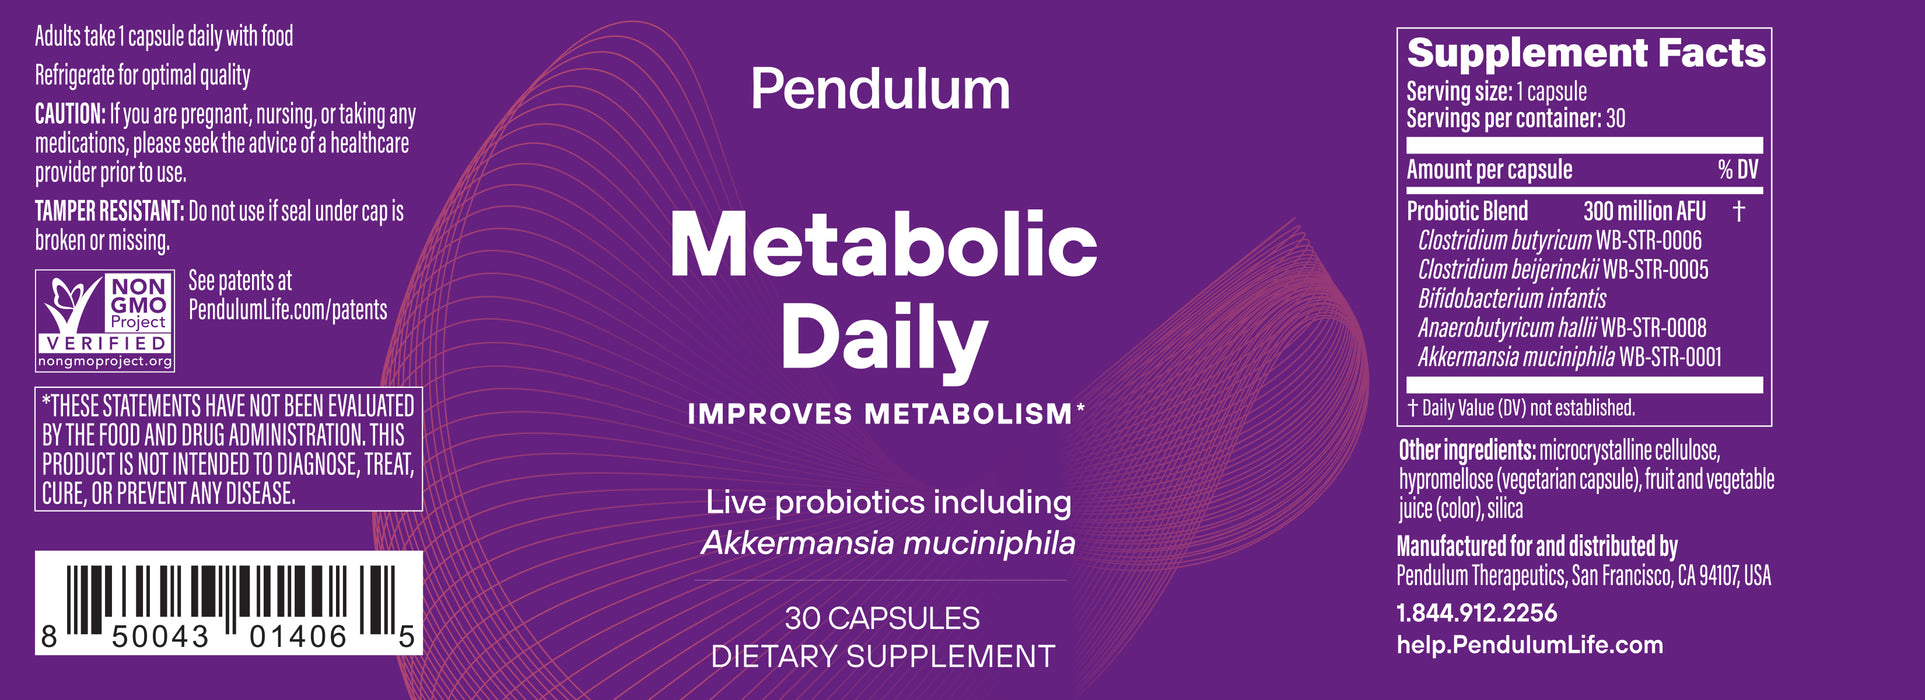 Pendulum Metabolic Daily with Akkermansia 30 capsules